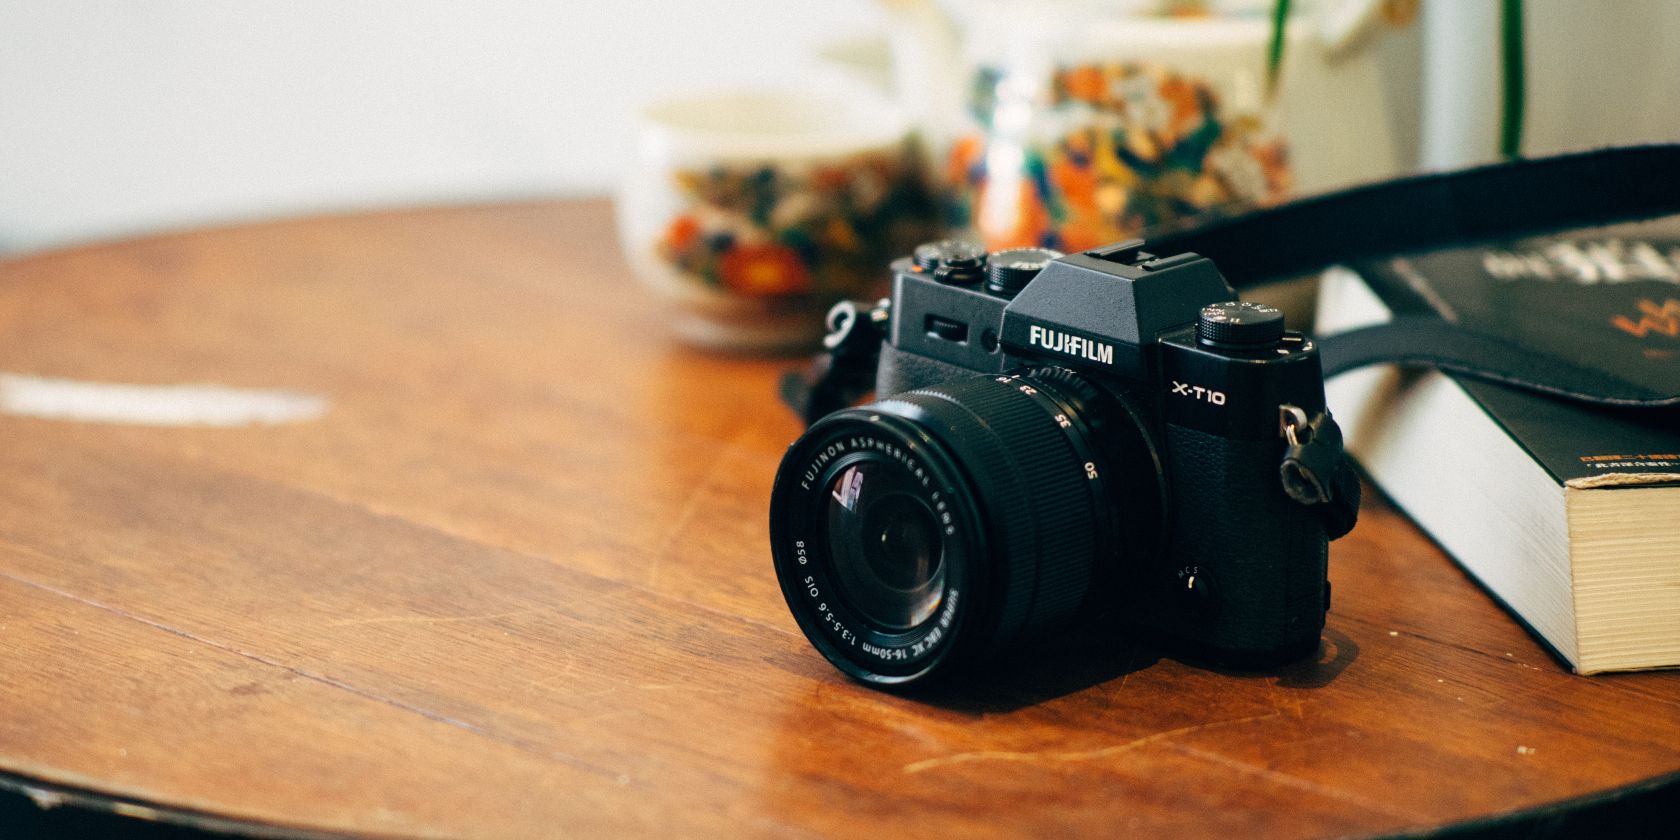 How to Customize Fujifilm Camera Profiles